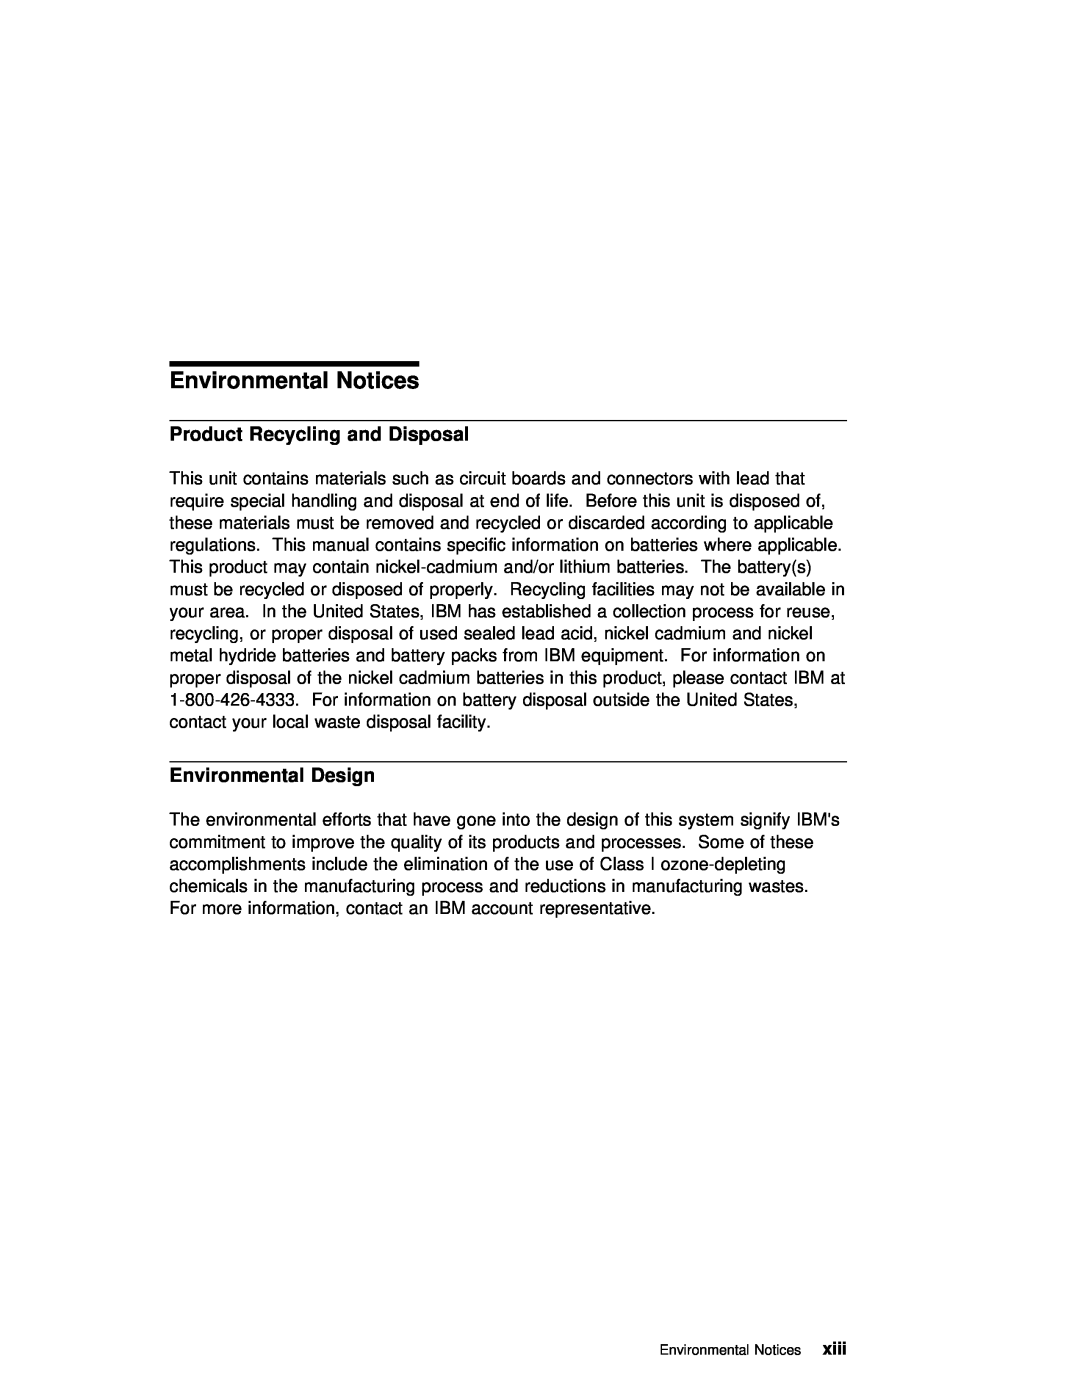 IBM B50 manual Environmental Notices, Product Recycling and Disposal, Environmental Design 